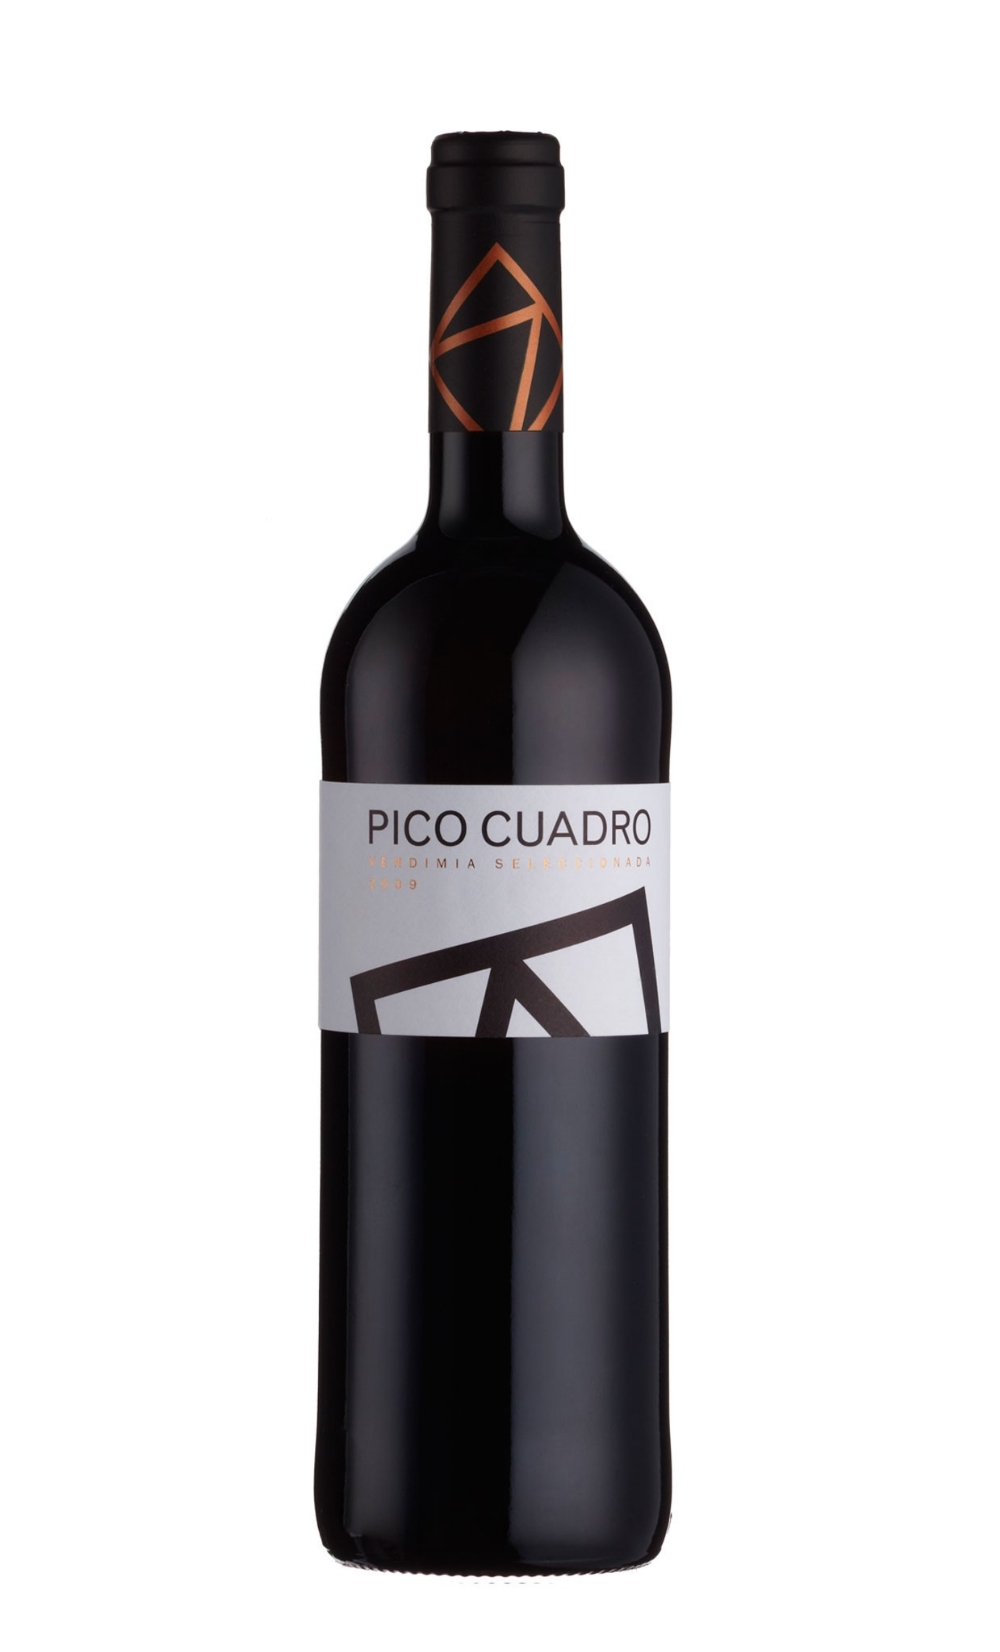 â€  Ribera del Duero DO, Pico Cuadro Vendimia Seleccionada 2009 vintage red wine x 6 bottles. WINE